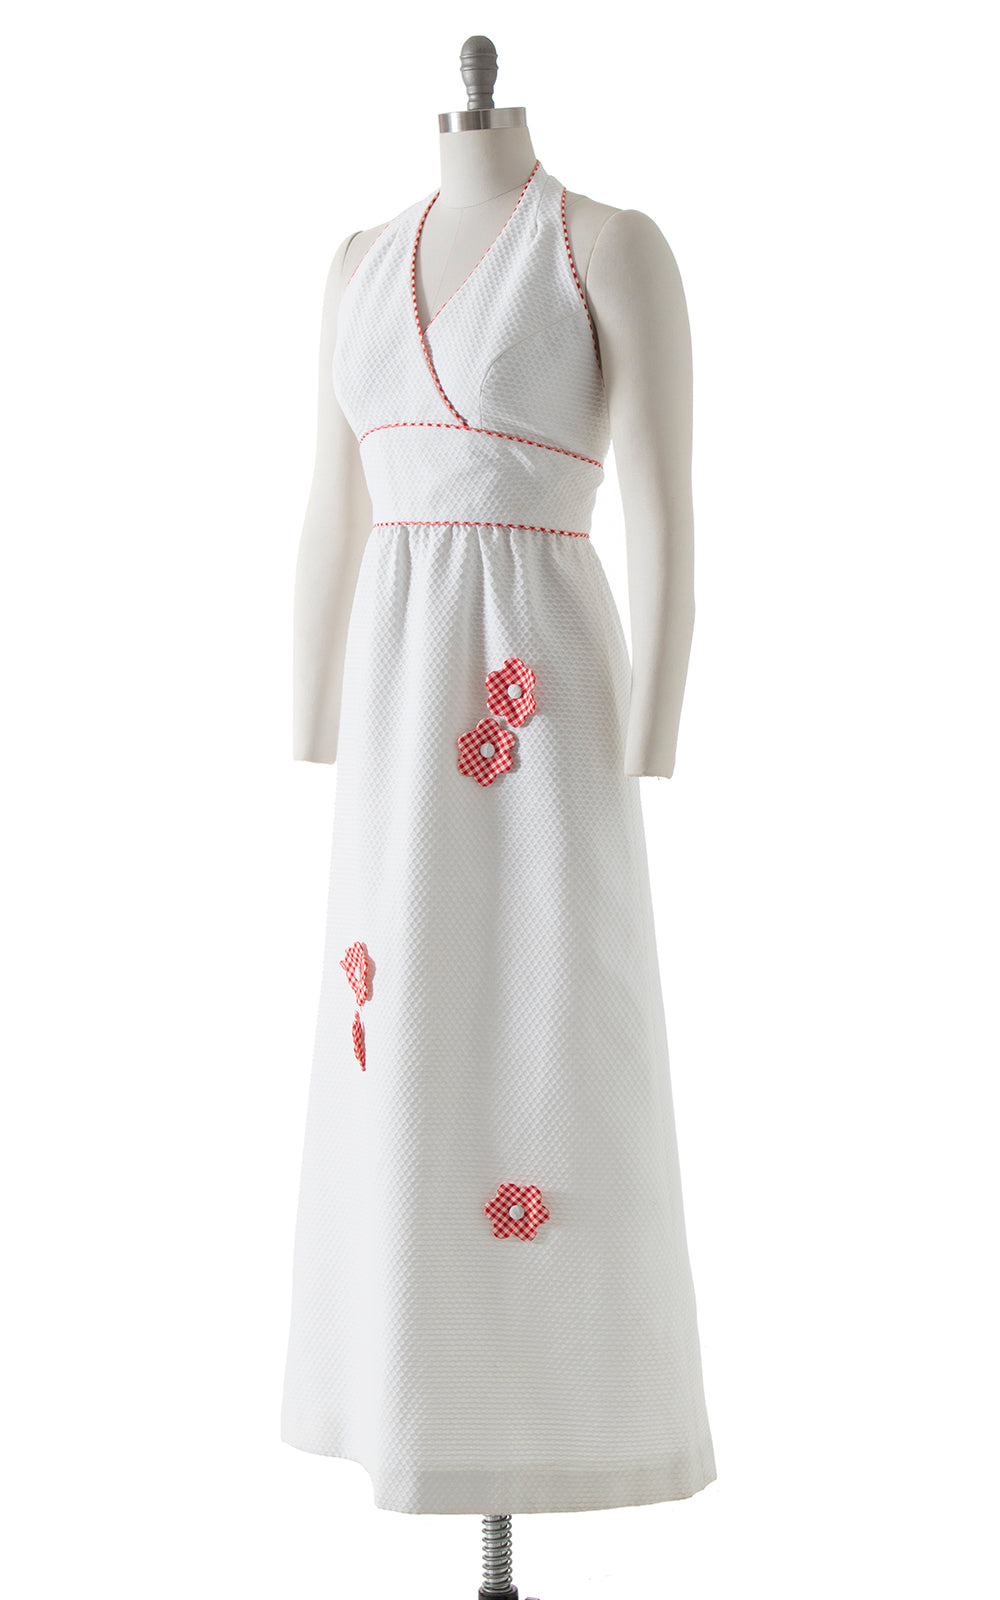 Vintage 1970s 70s Floral Applique Flower Halter White Cotton Gingham Open Back Maxi Dress Sundress Birthday Life Vintage